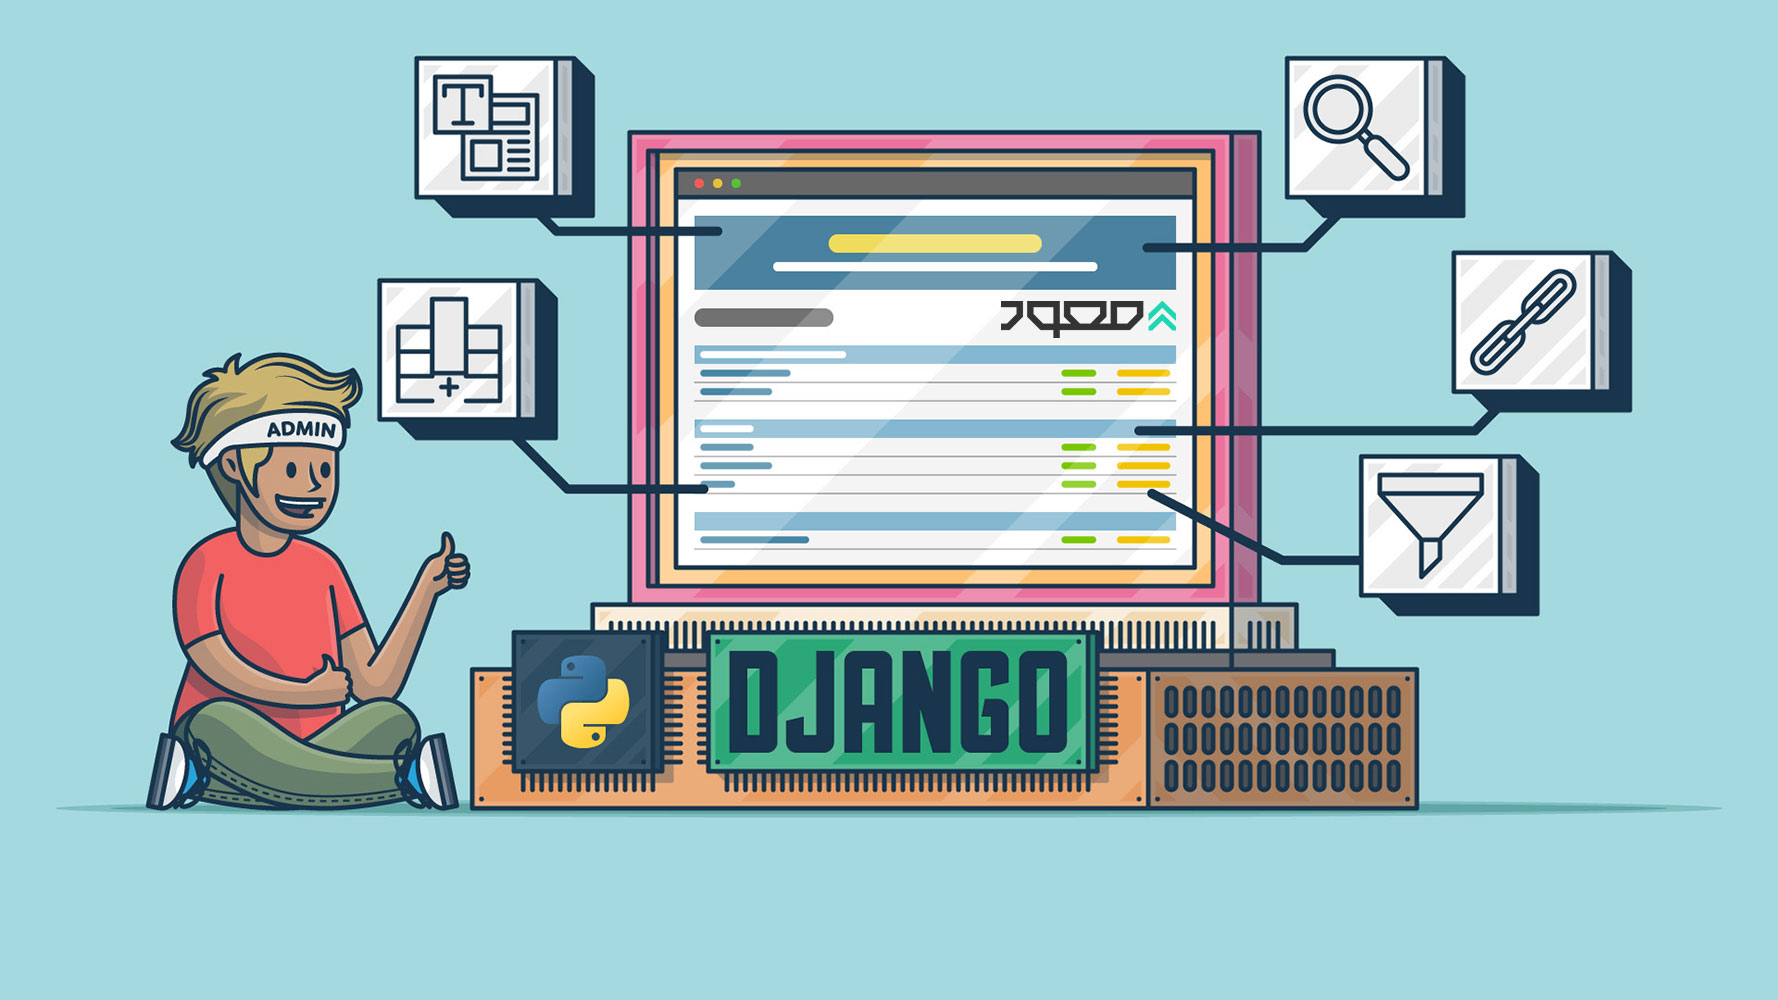 Django چیست؟